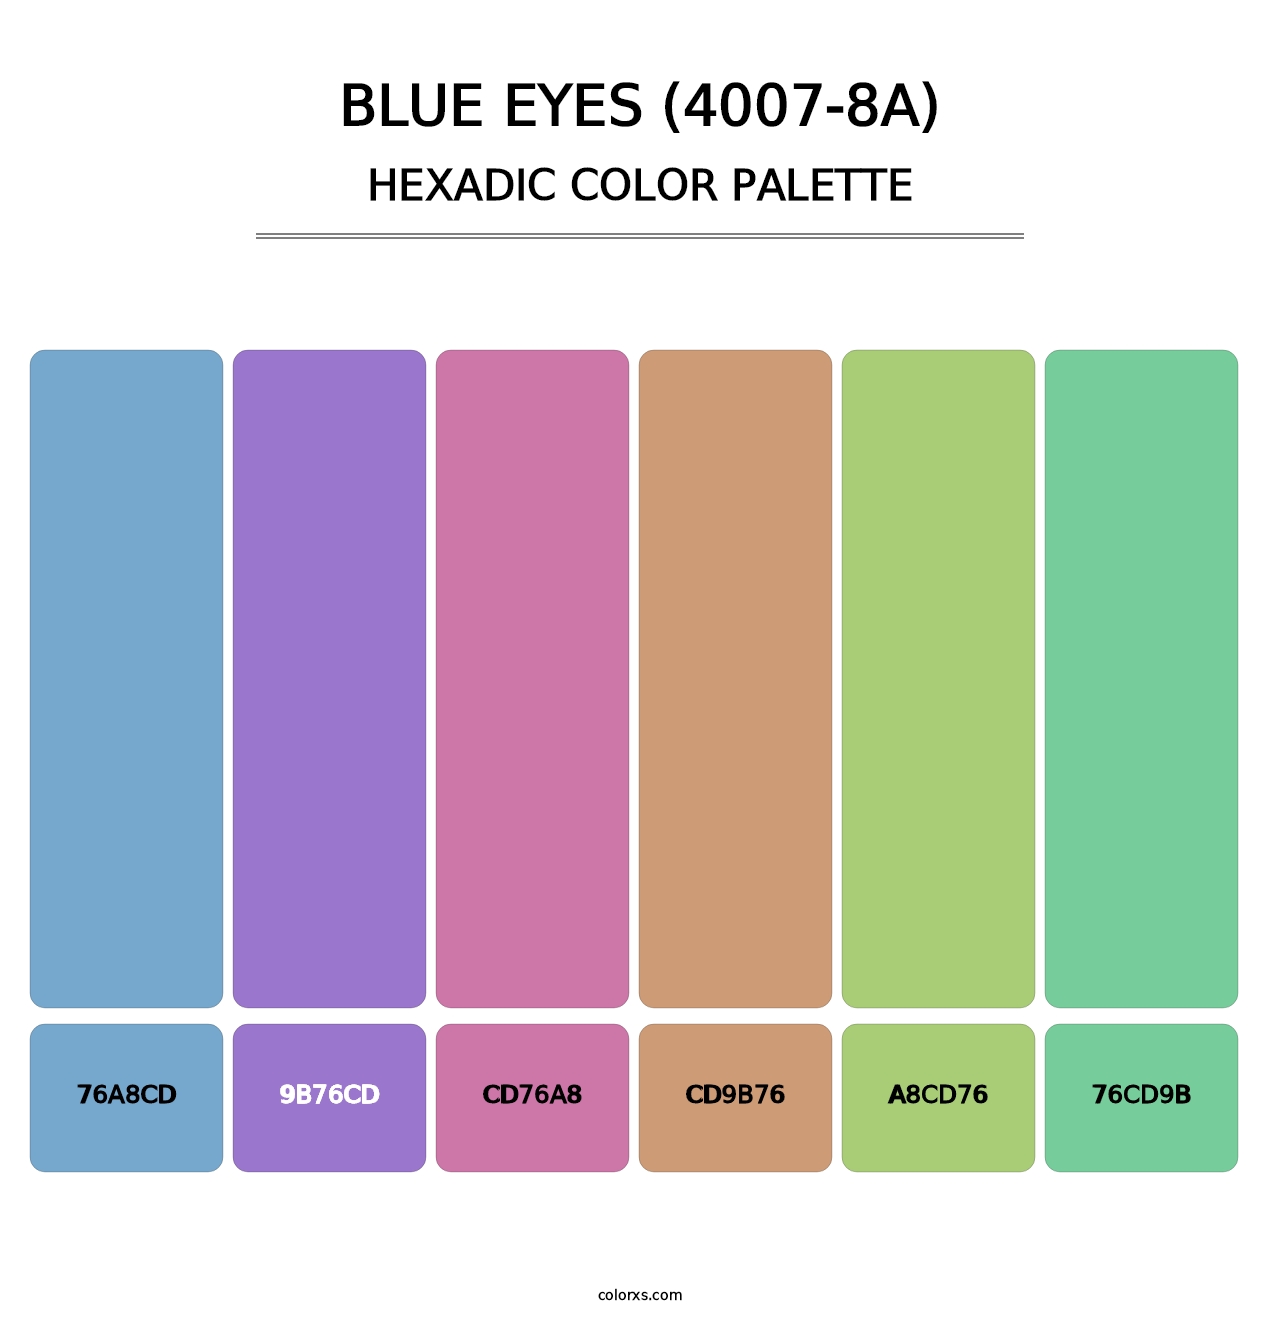 Blue Eyes (4007-8A) - Hexadic Color Palette